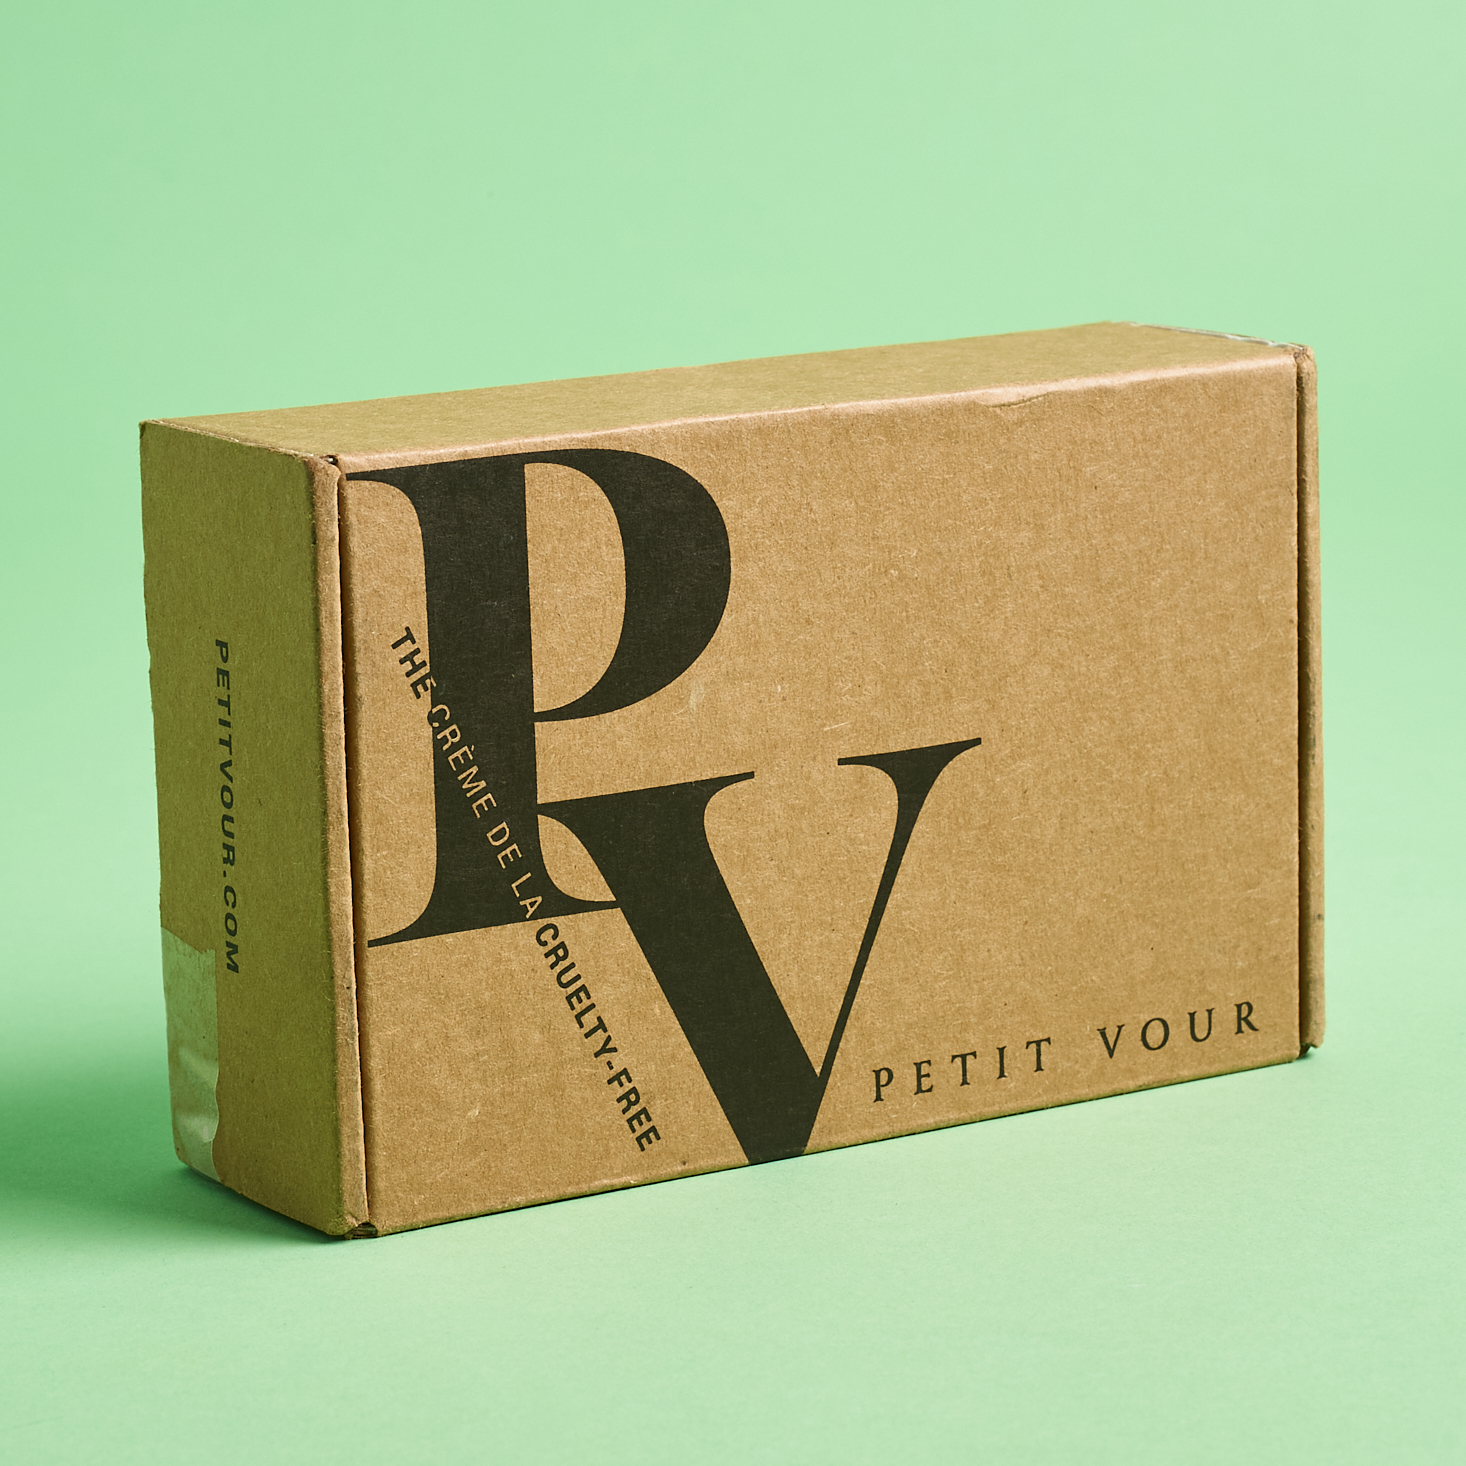 Petit Vour Vegan Beauty Box Review + Coupon – February 2021